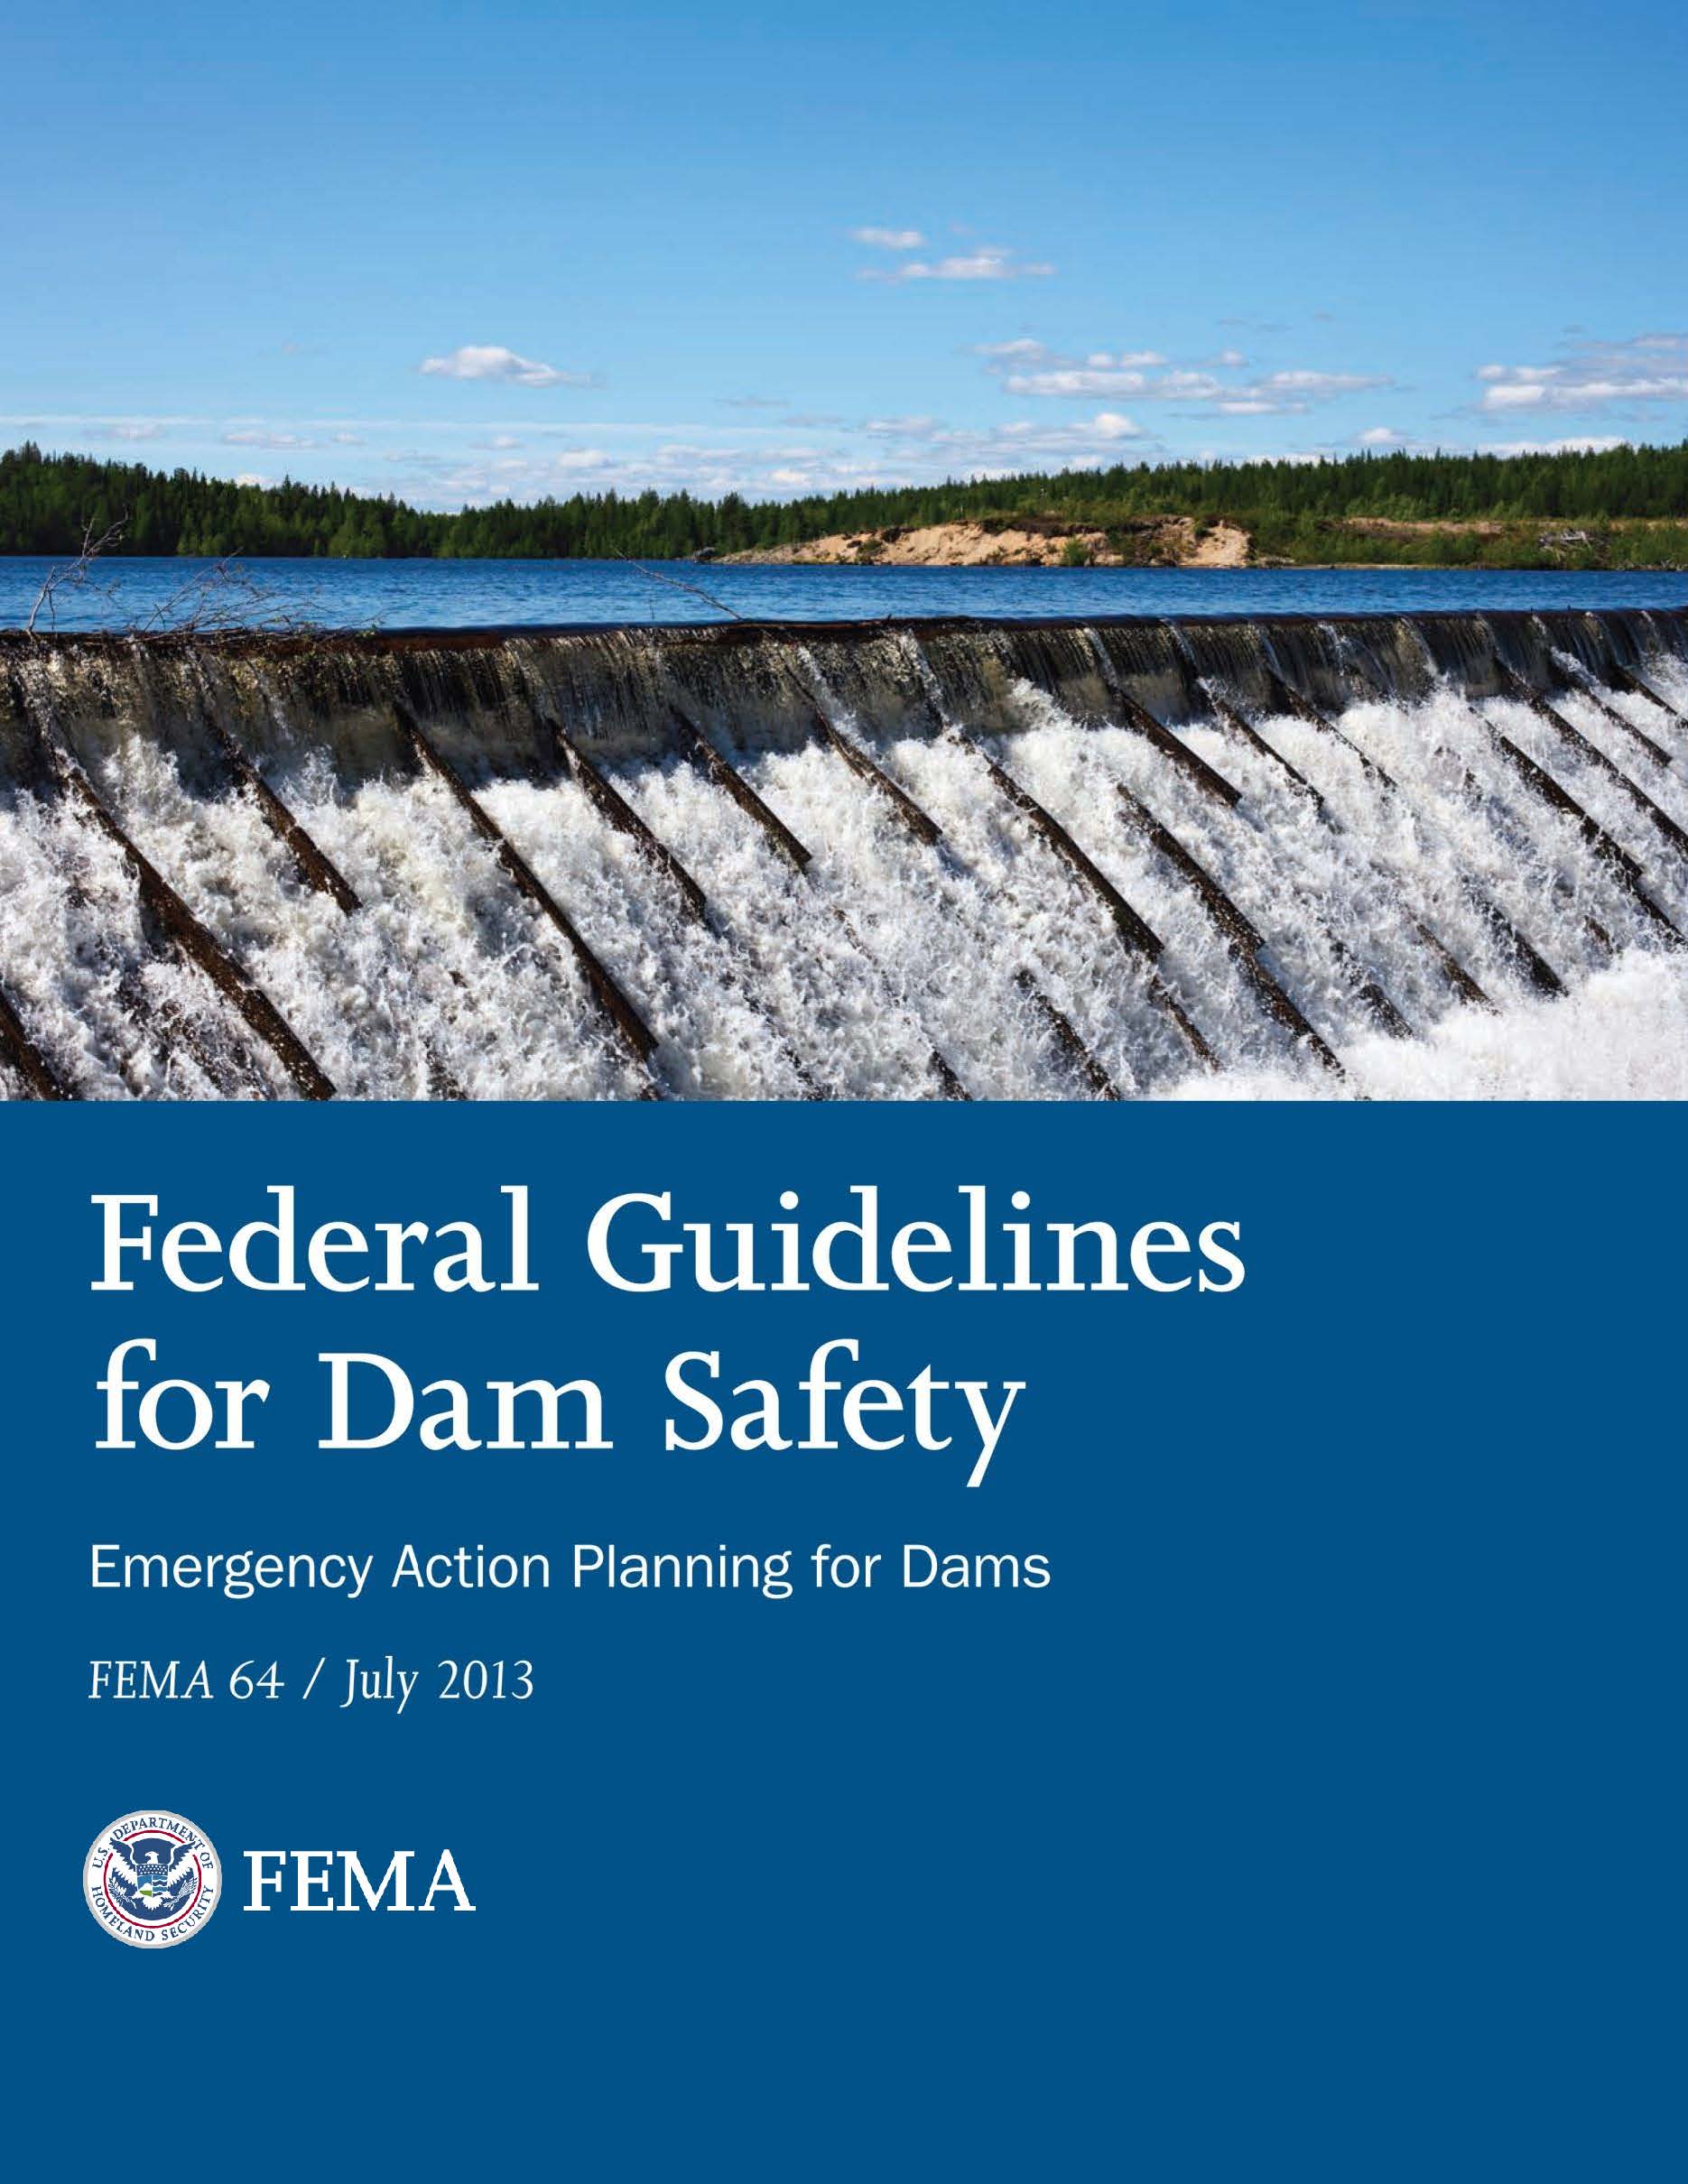 Federal_Guidelines_EAP FEMA_P-64-2013.jpg